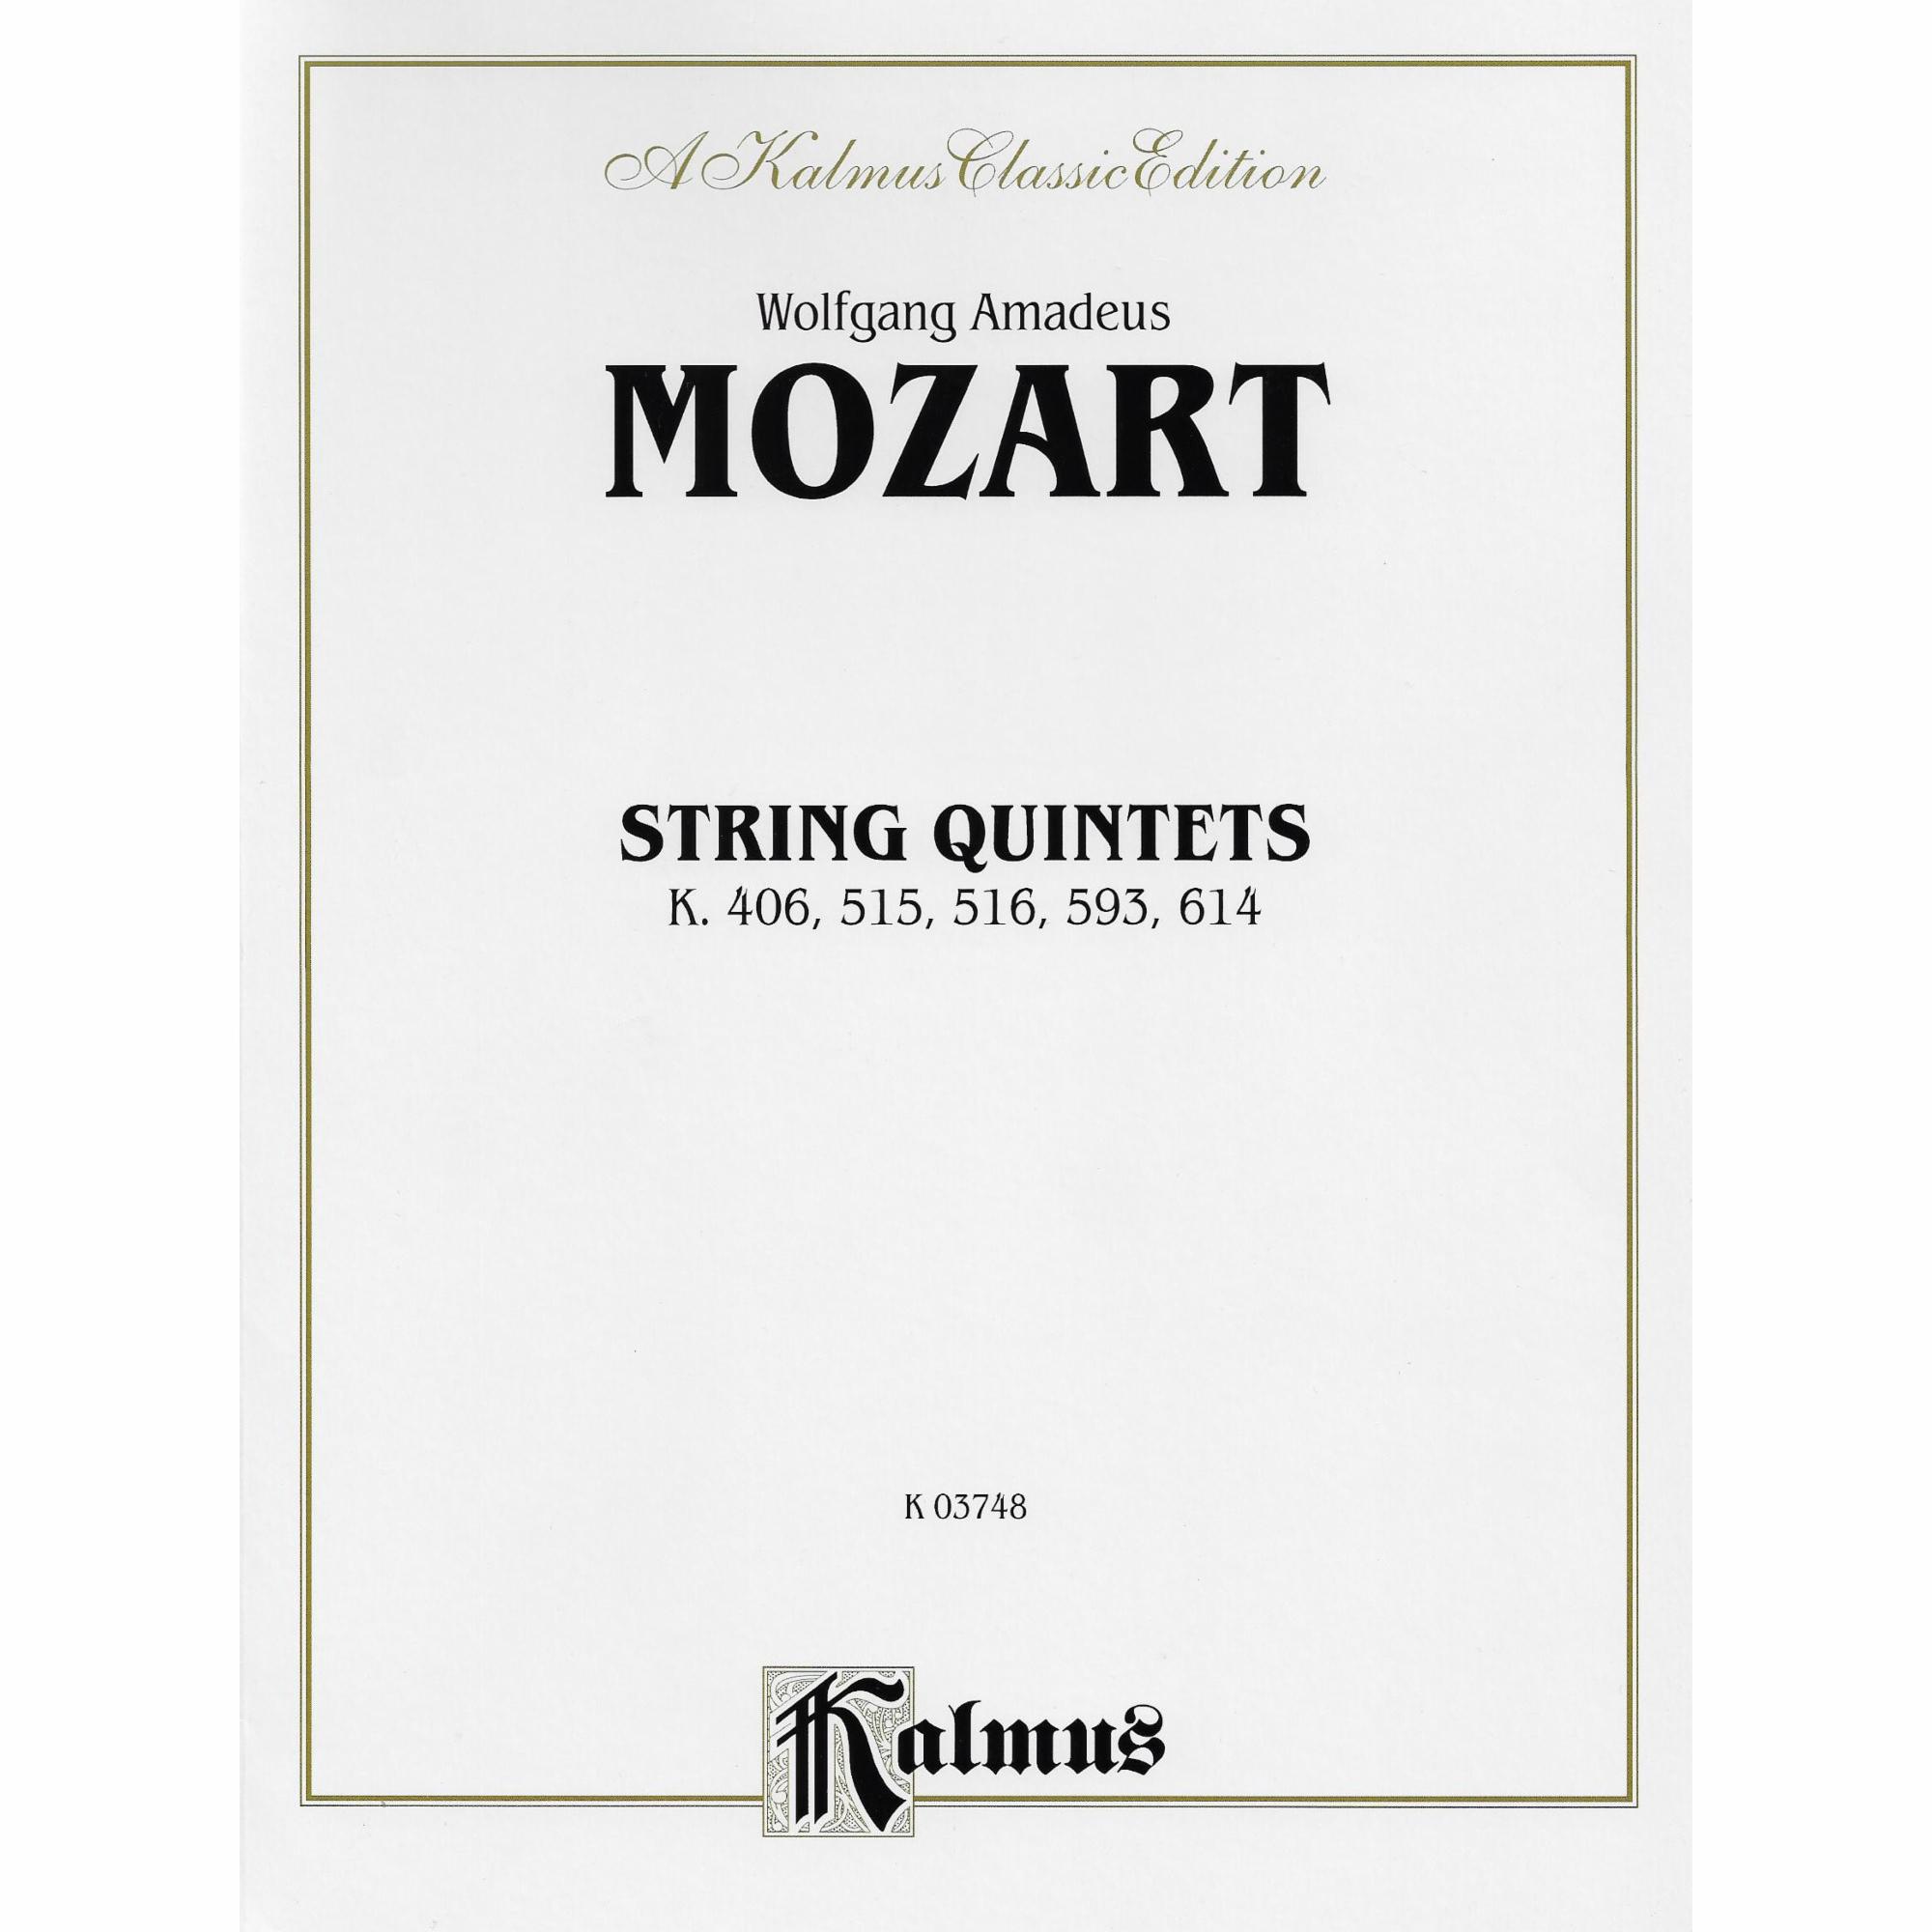 Mozart -- String Quintets, K. 406, 515, 516, 593 & 614